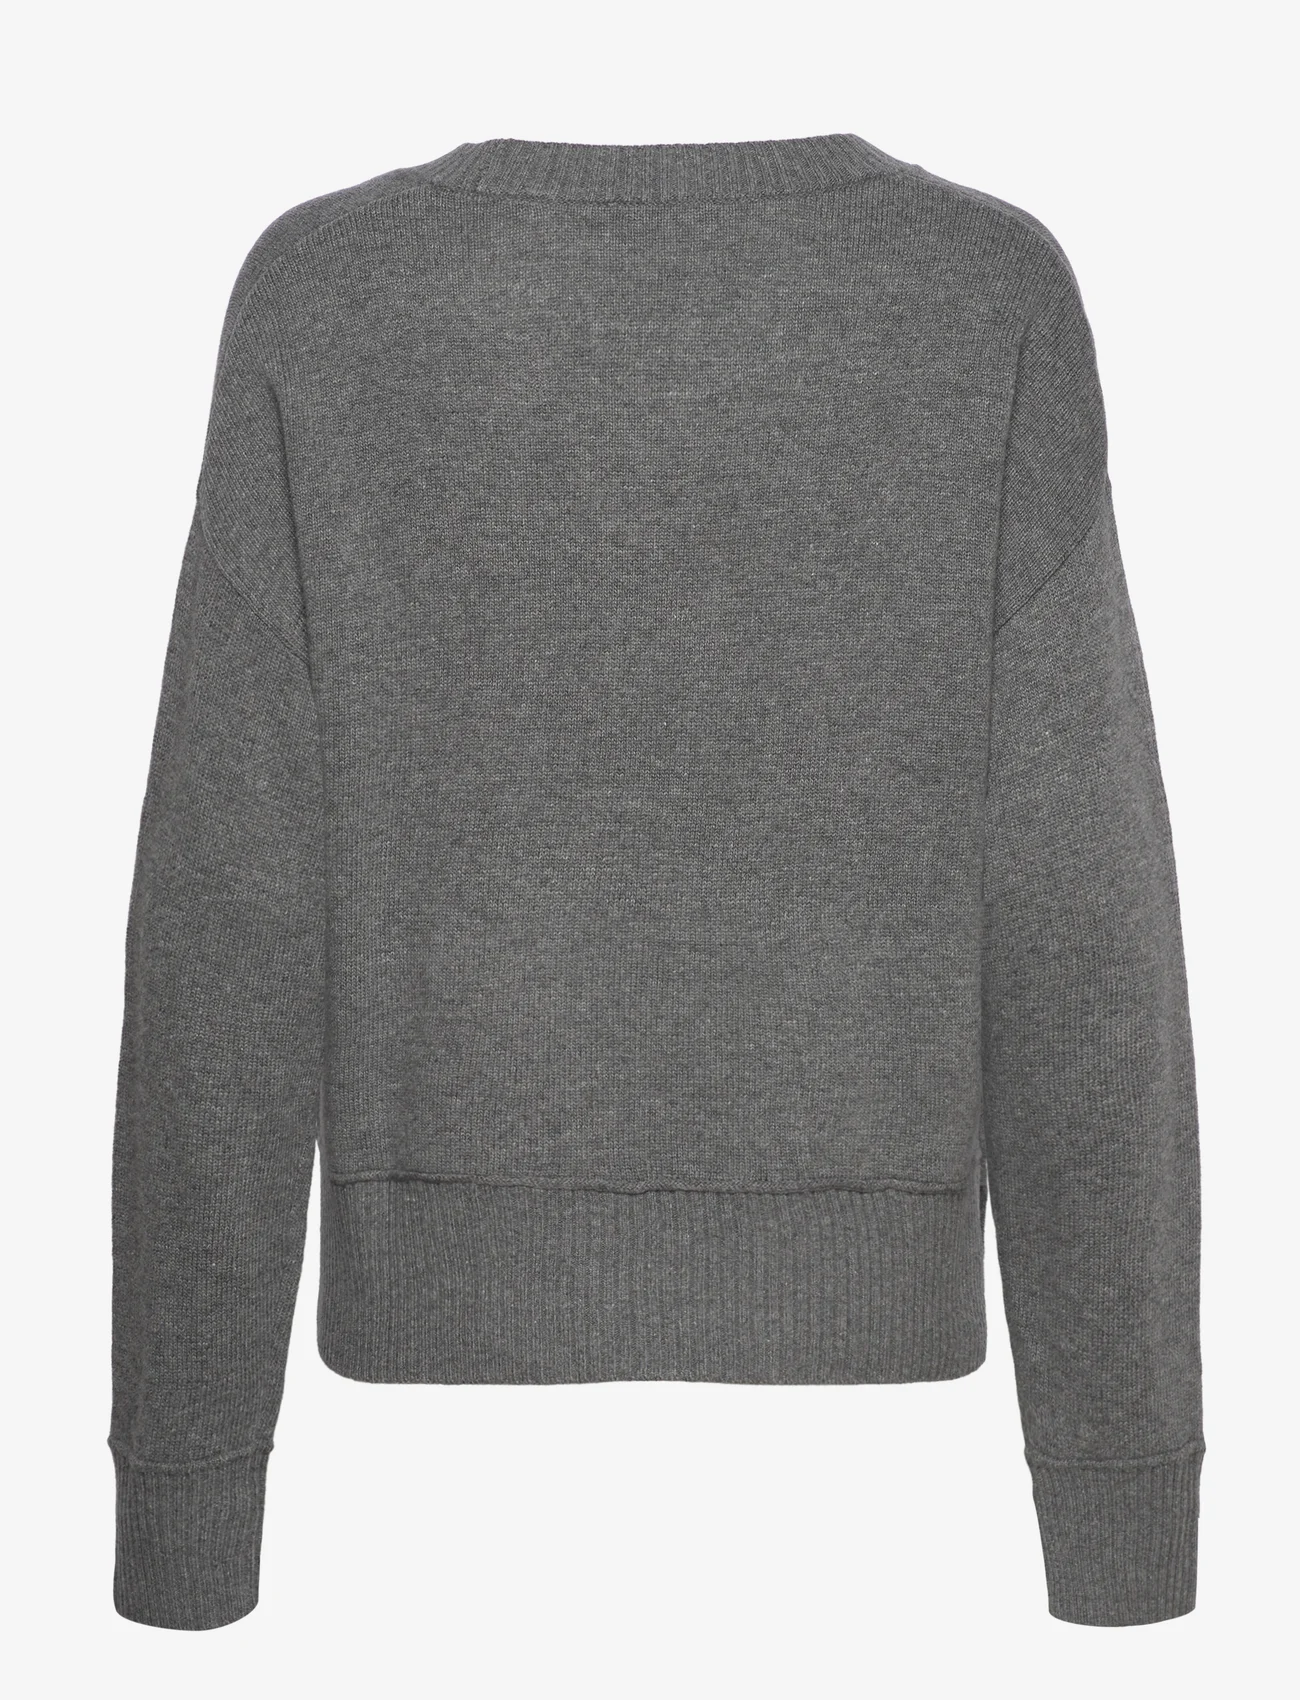 Esprit Collection - Knitted wool blend jumper - neulepuserot - medium grey 5 - 1